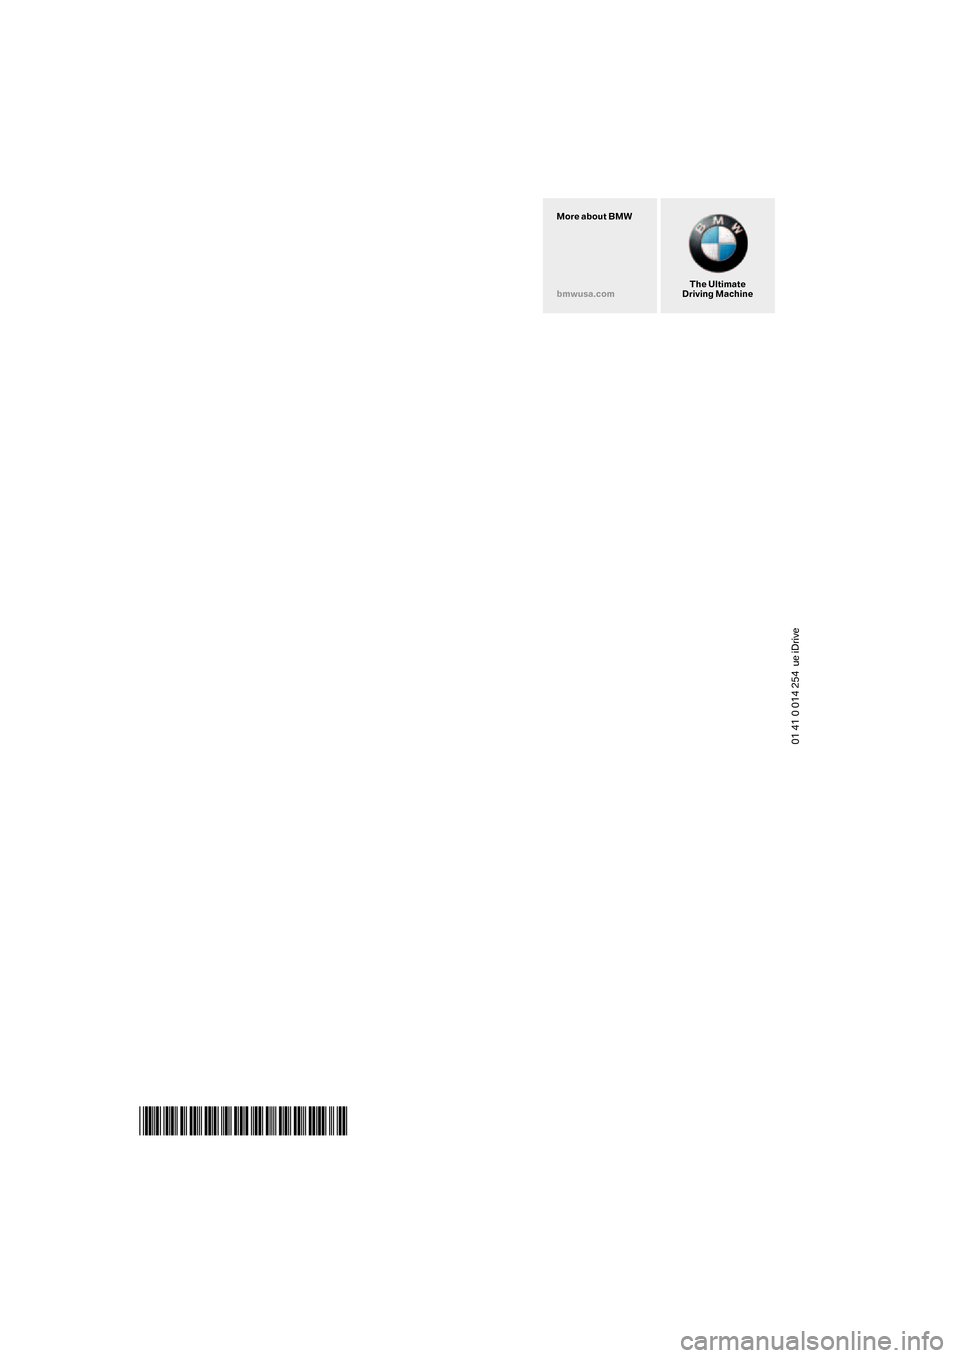 BMW 323I SEDAN 2008 E90 Owners Manual 01 41 0 014 254  ue iDrive
*BL001425400C*
The Ultimate
Driving Machine More about BMW
bmwusa.com 